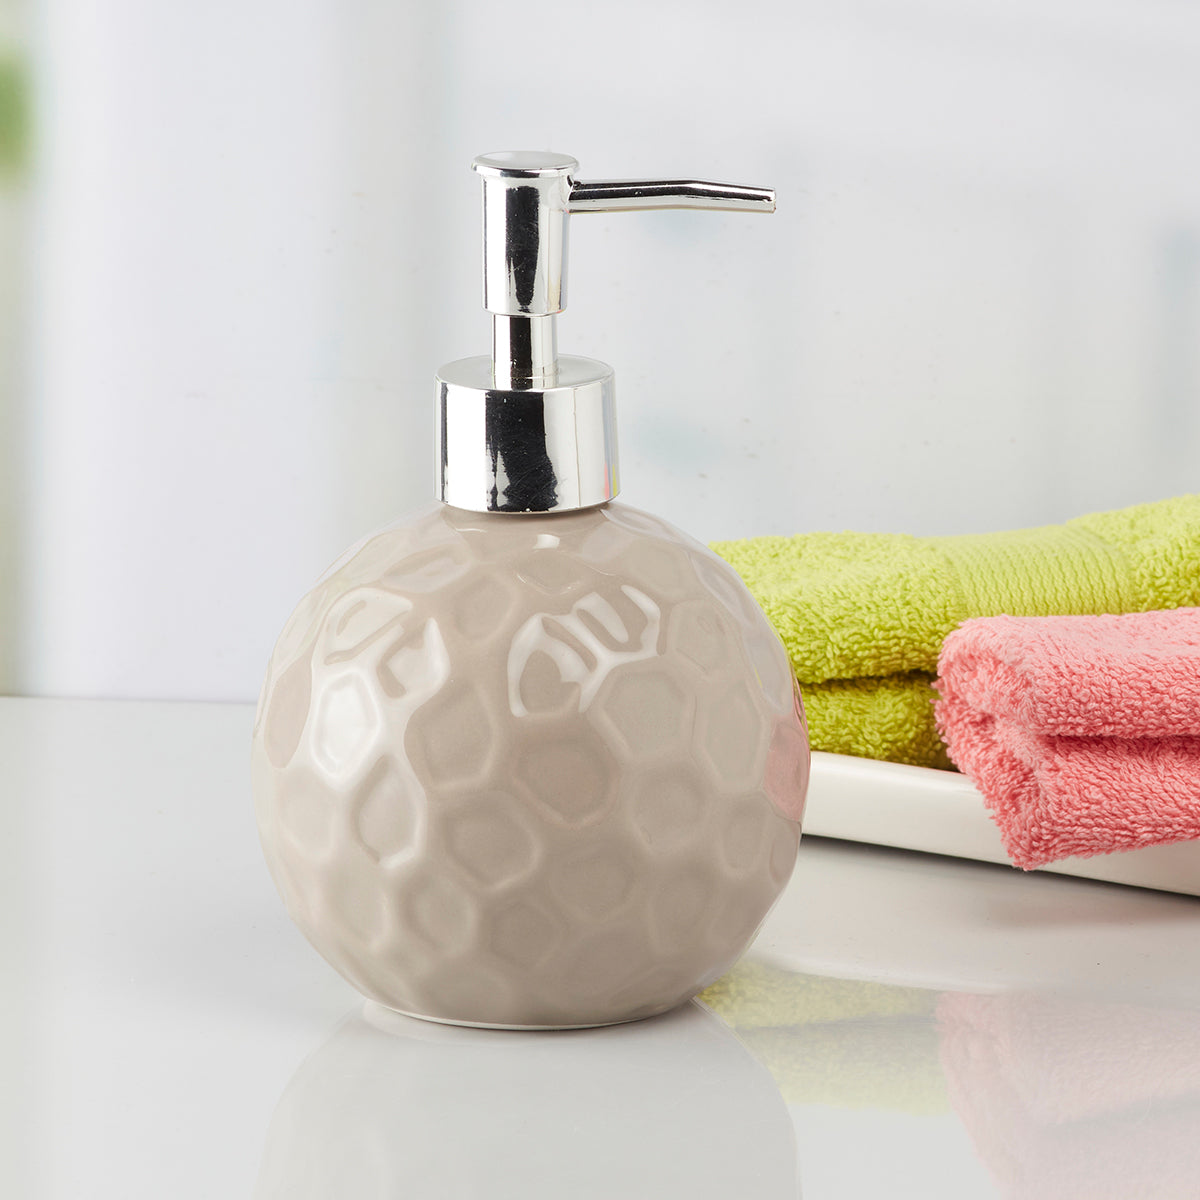 Ceramic Soap Dispenser handwash Pump for Bathroom, Set of 1, White (8011)